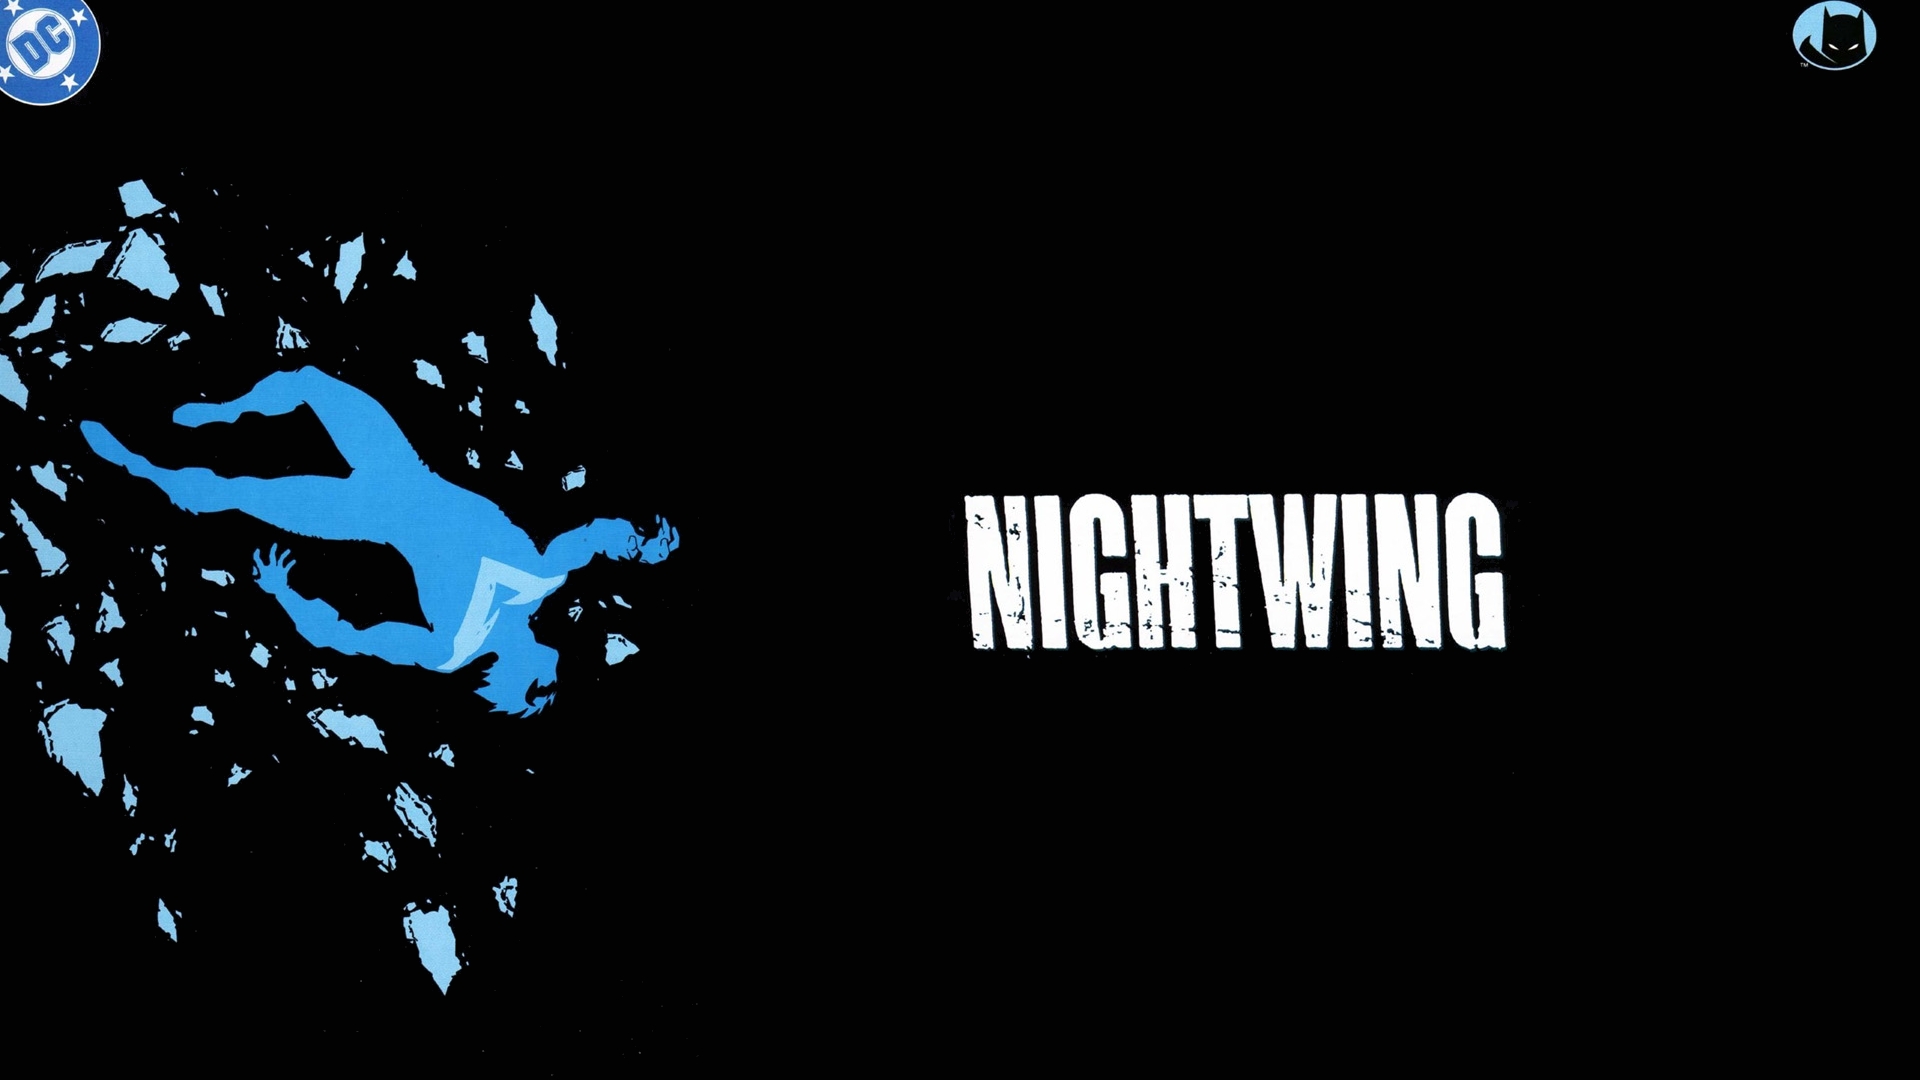 Nightwing Computer Wallpapers Desktop Backgrounds 1920x1080